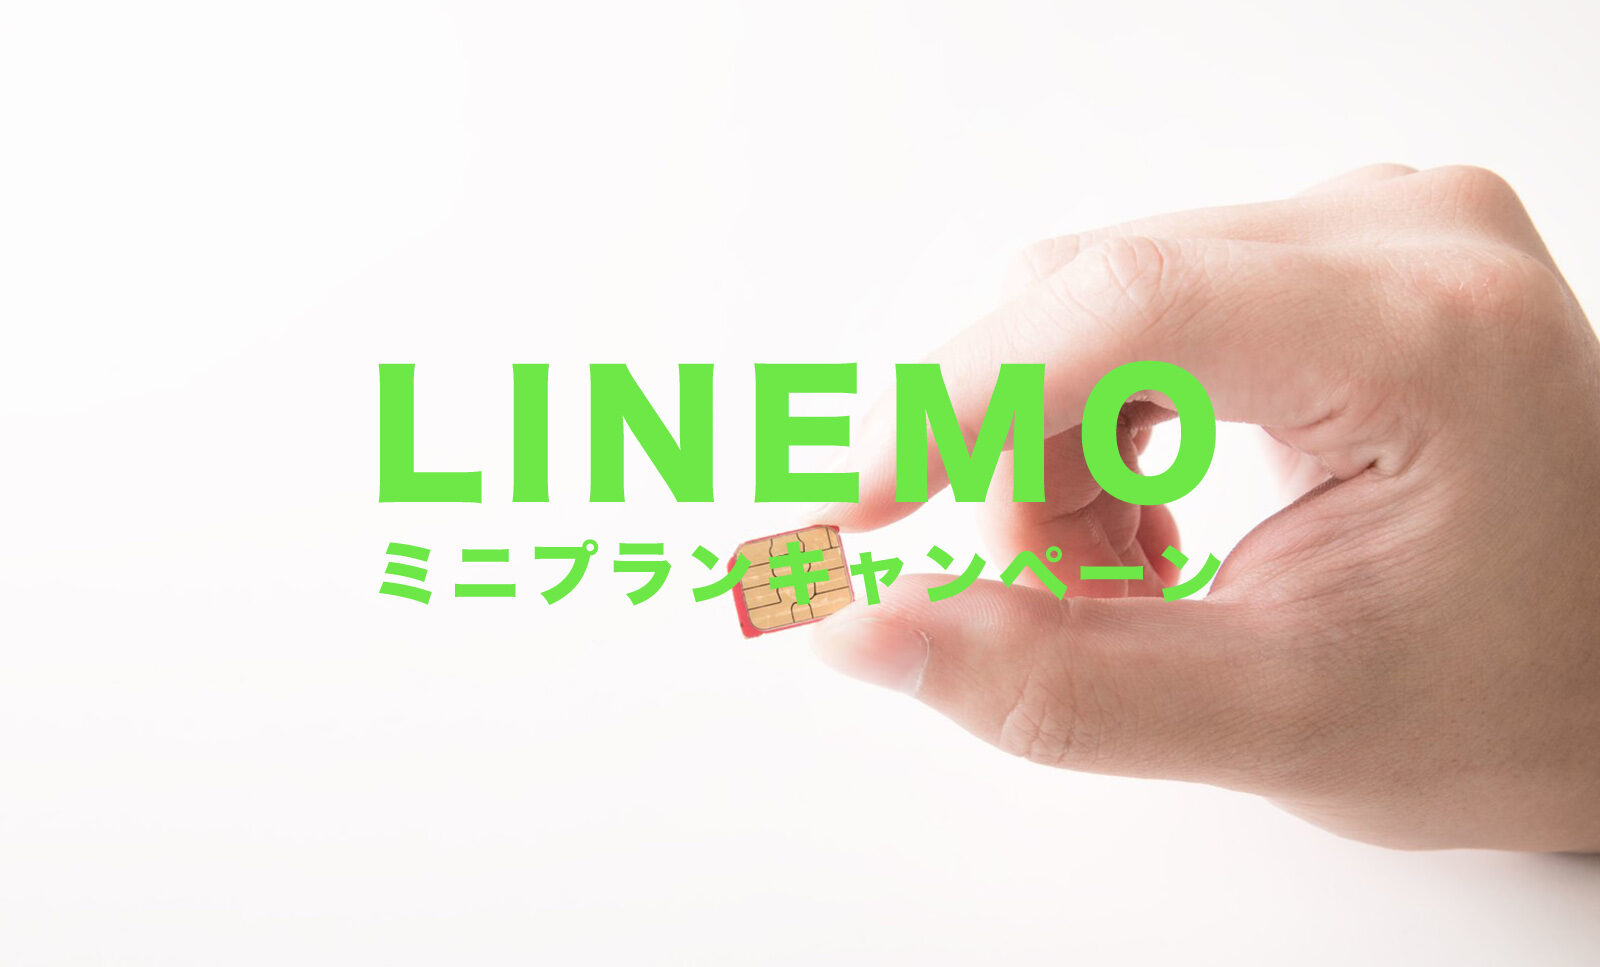 LINEMO(ラインモ)のミニプランは10000円相当分のPayPay等のキャンペーンの対象になる？のサムネイル画像